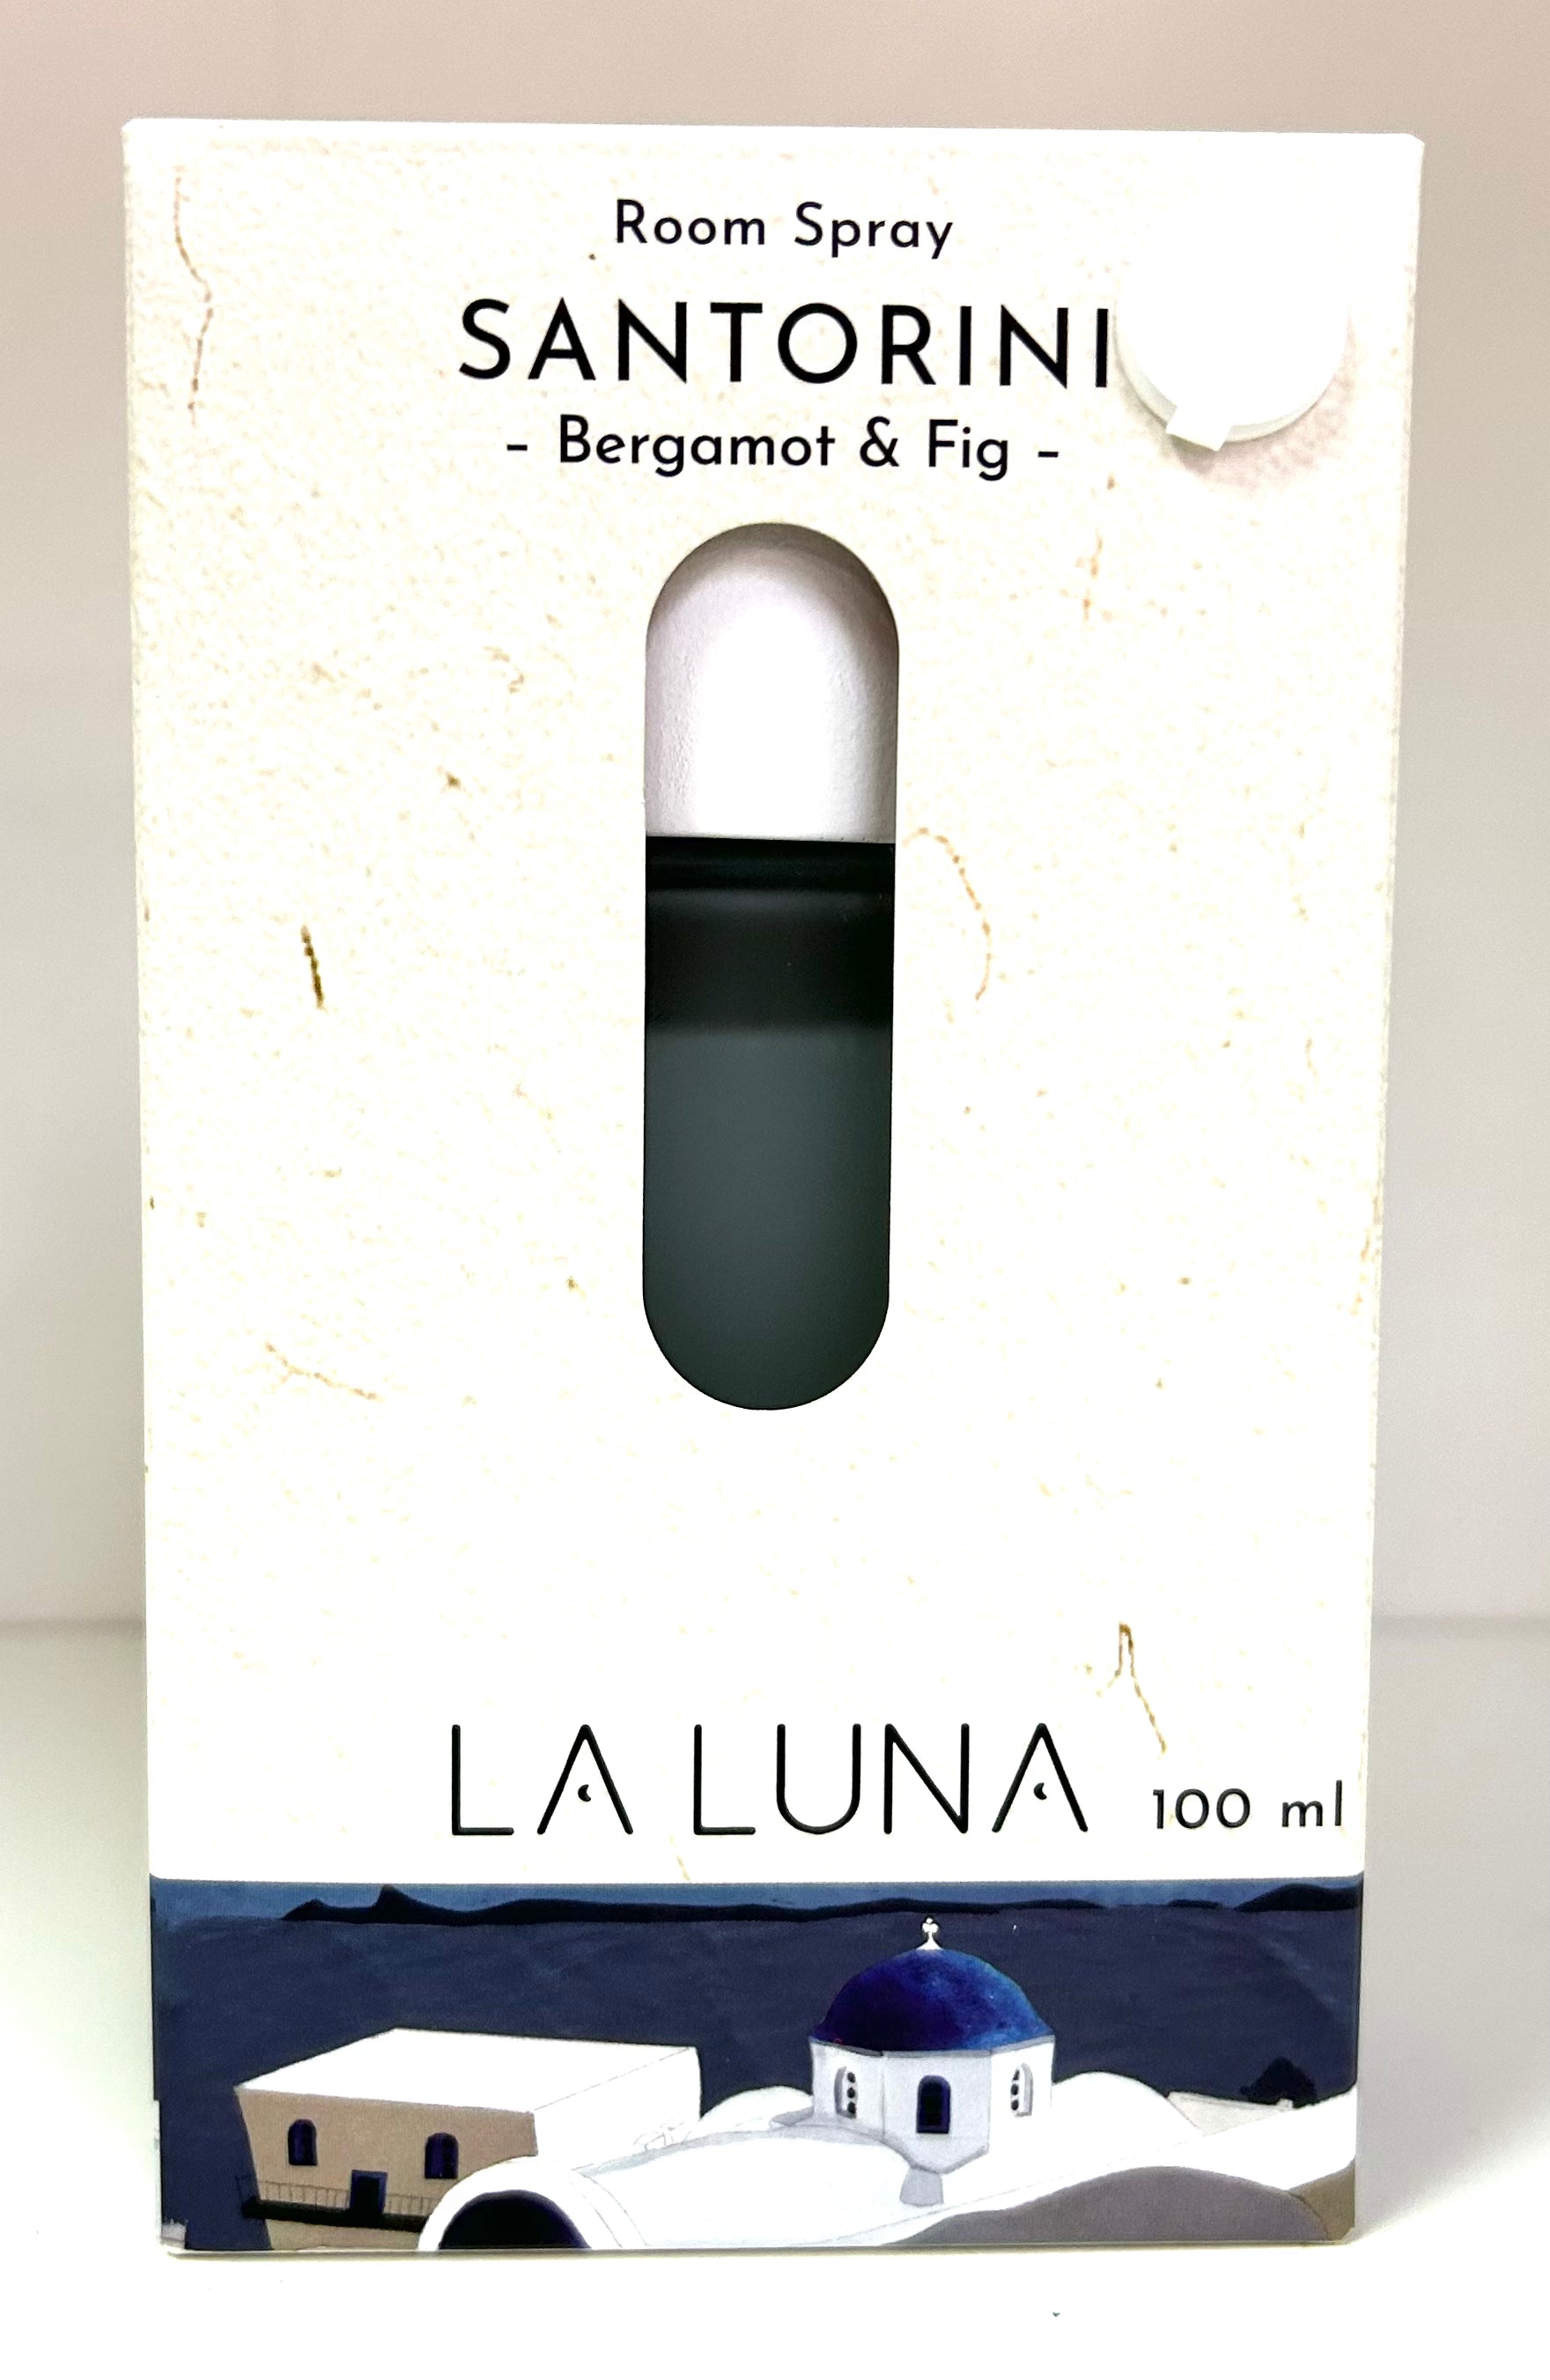 La Luna Room Spray - Lighten Up Shop